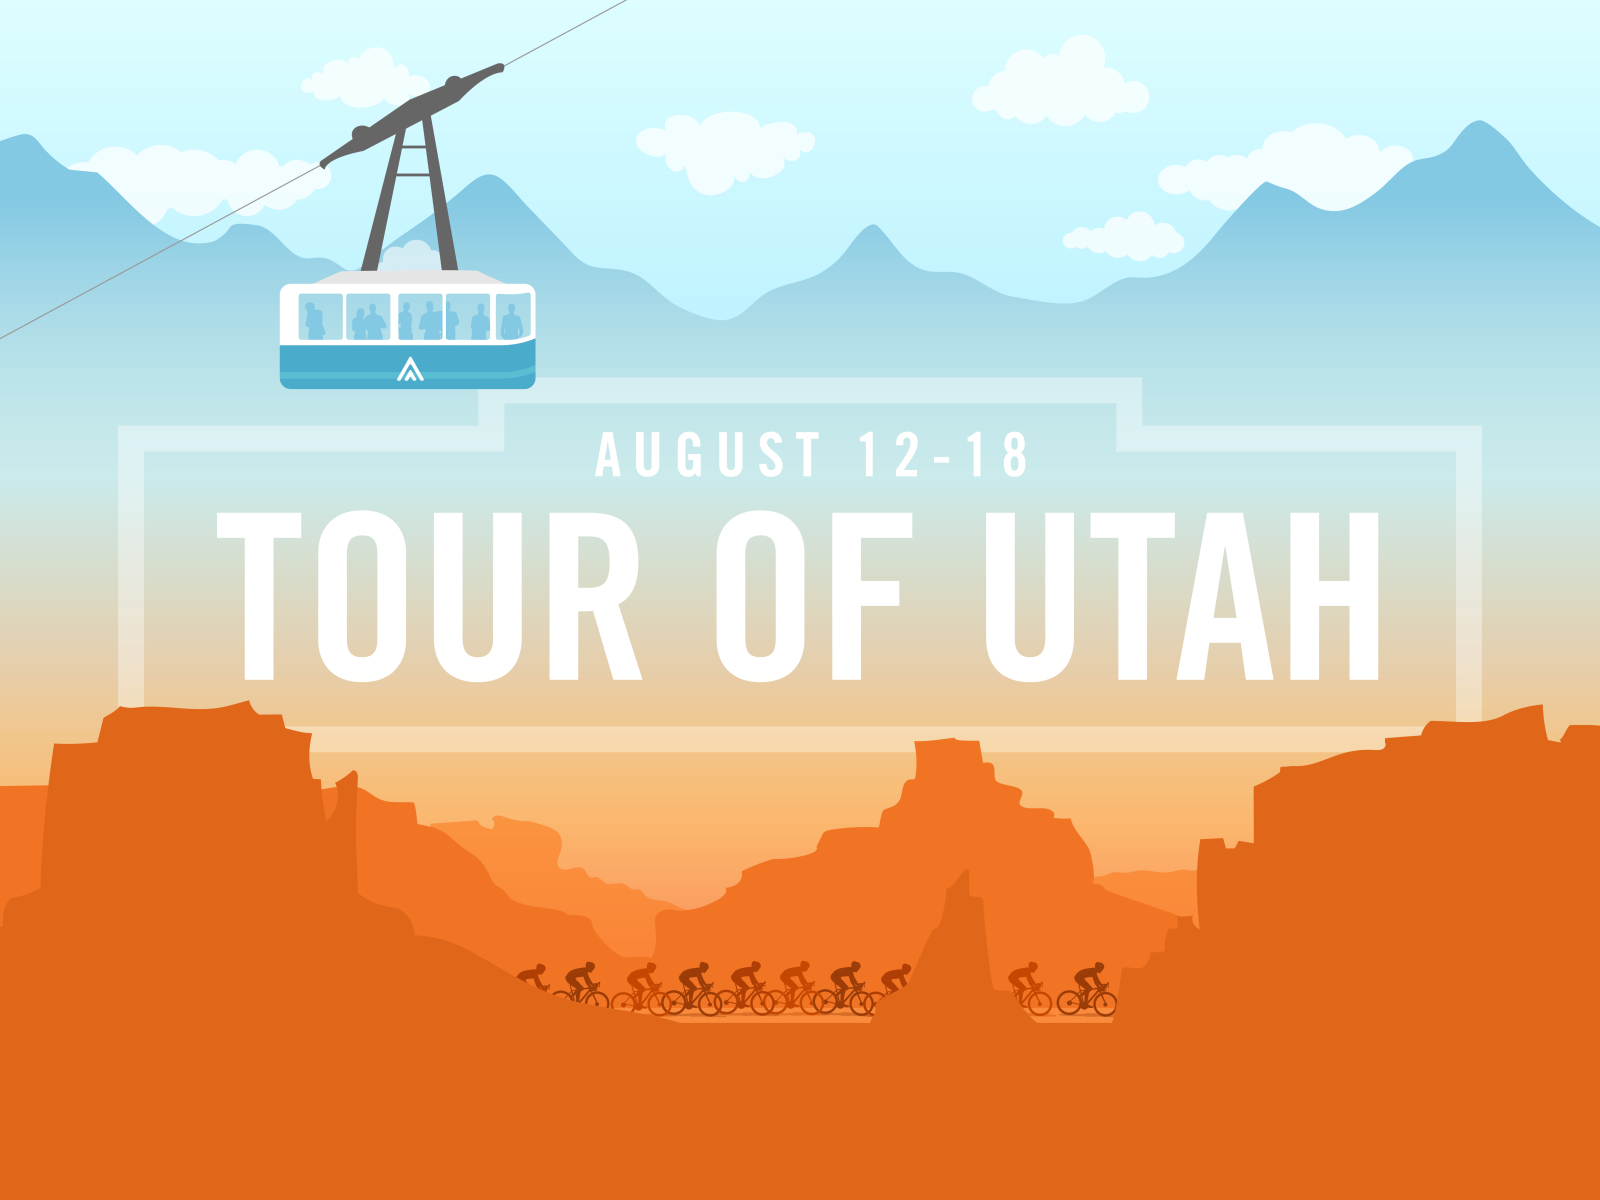 Tour of Utah by Emily SaintOnge on Dribbble